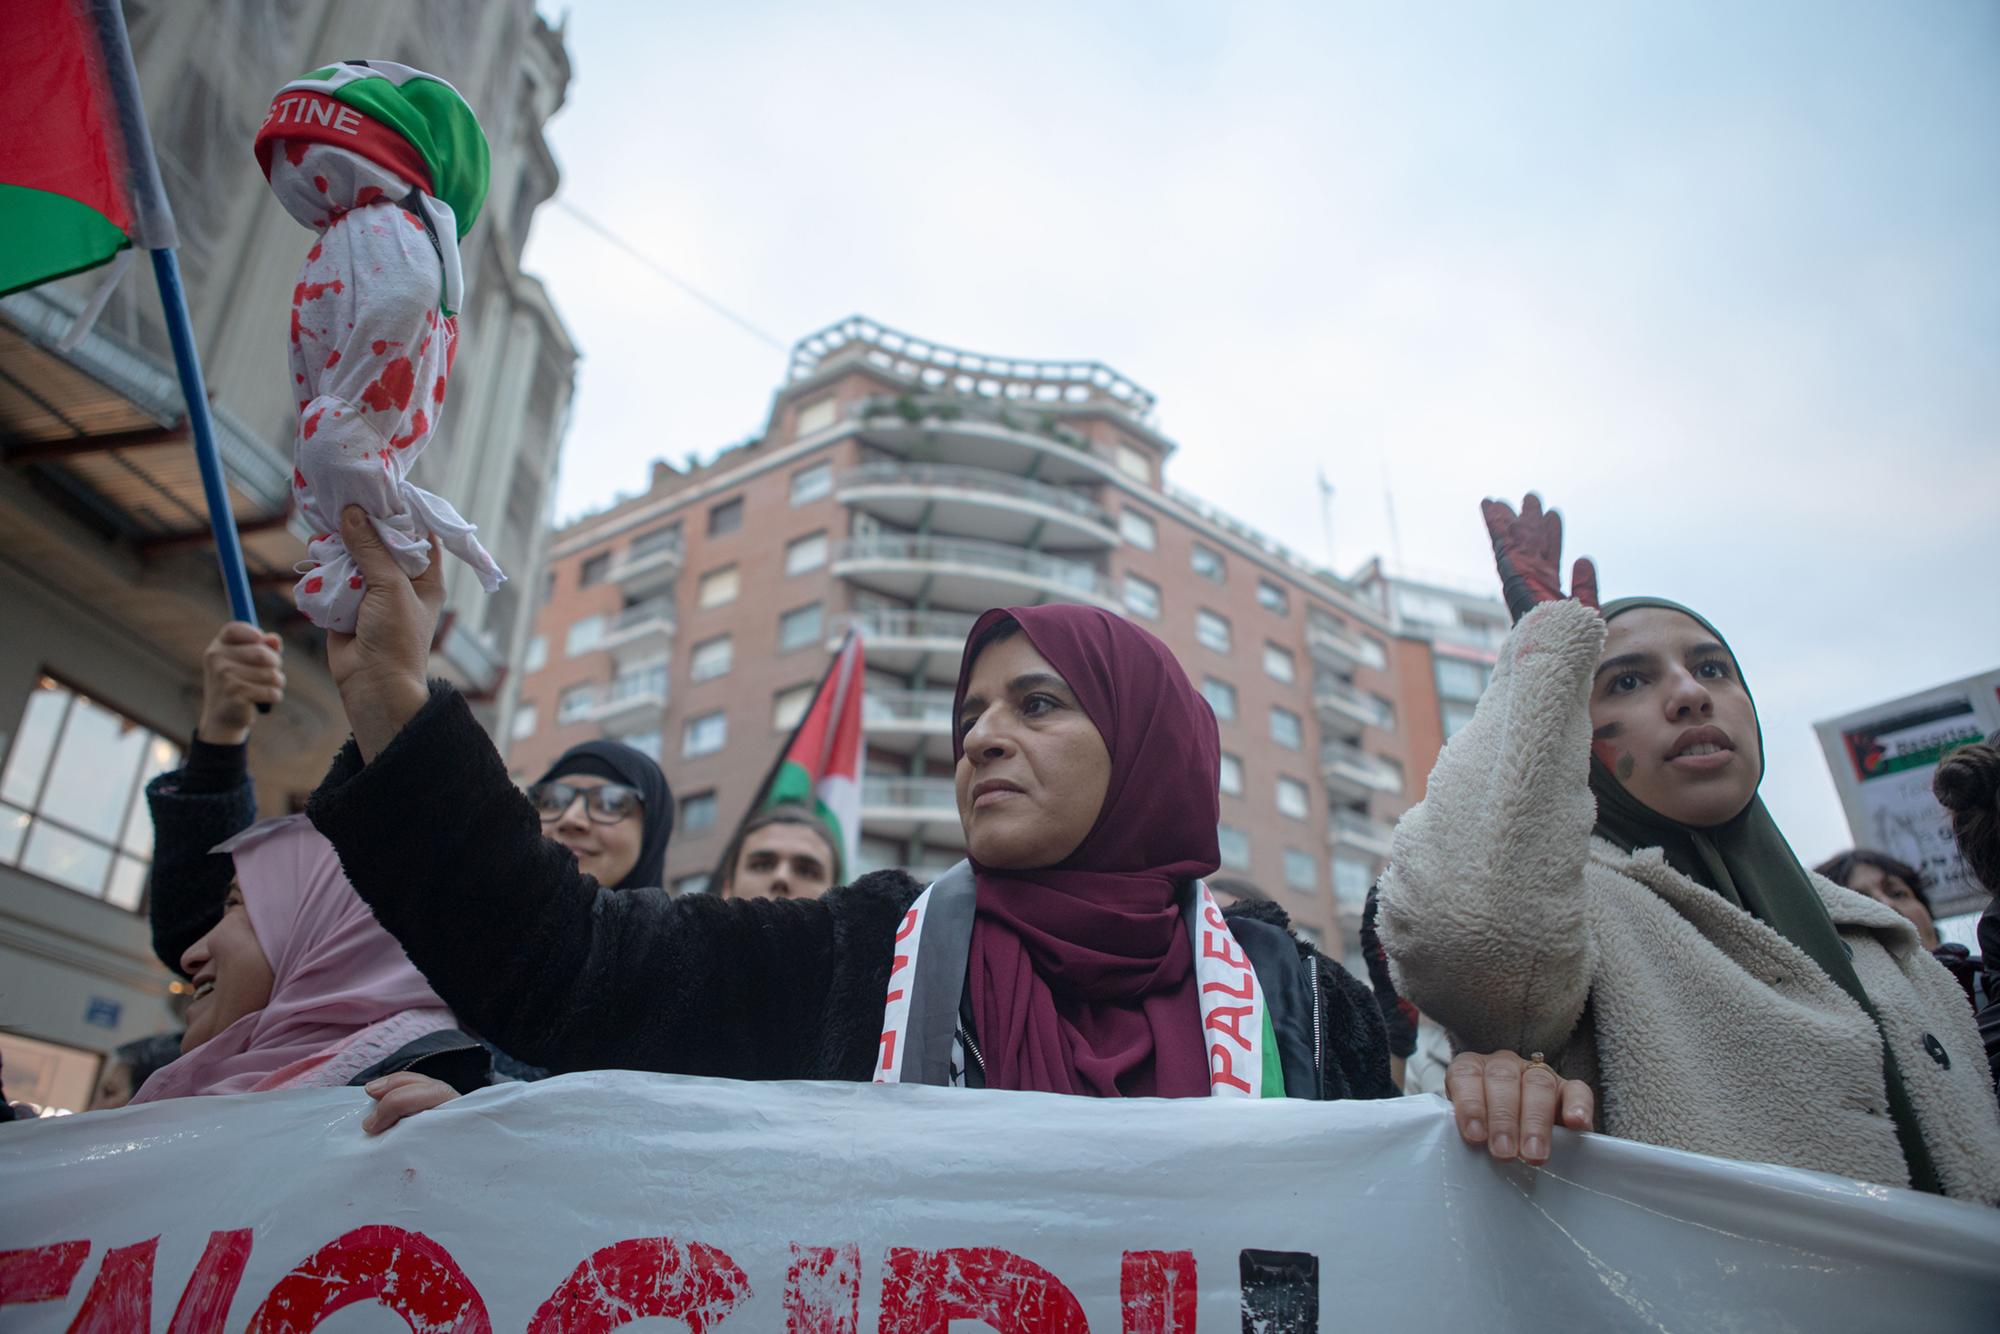 Palestina Manifestacion Valencia - 9